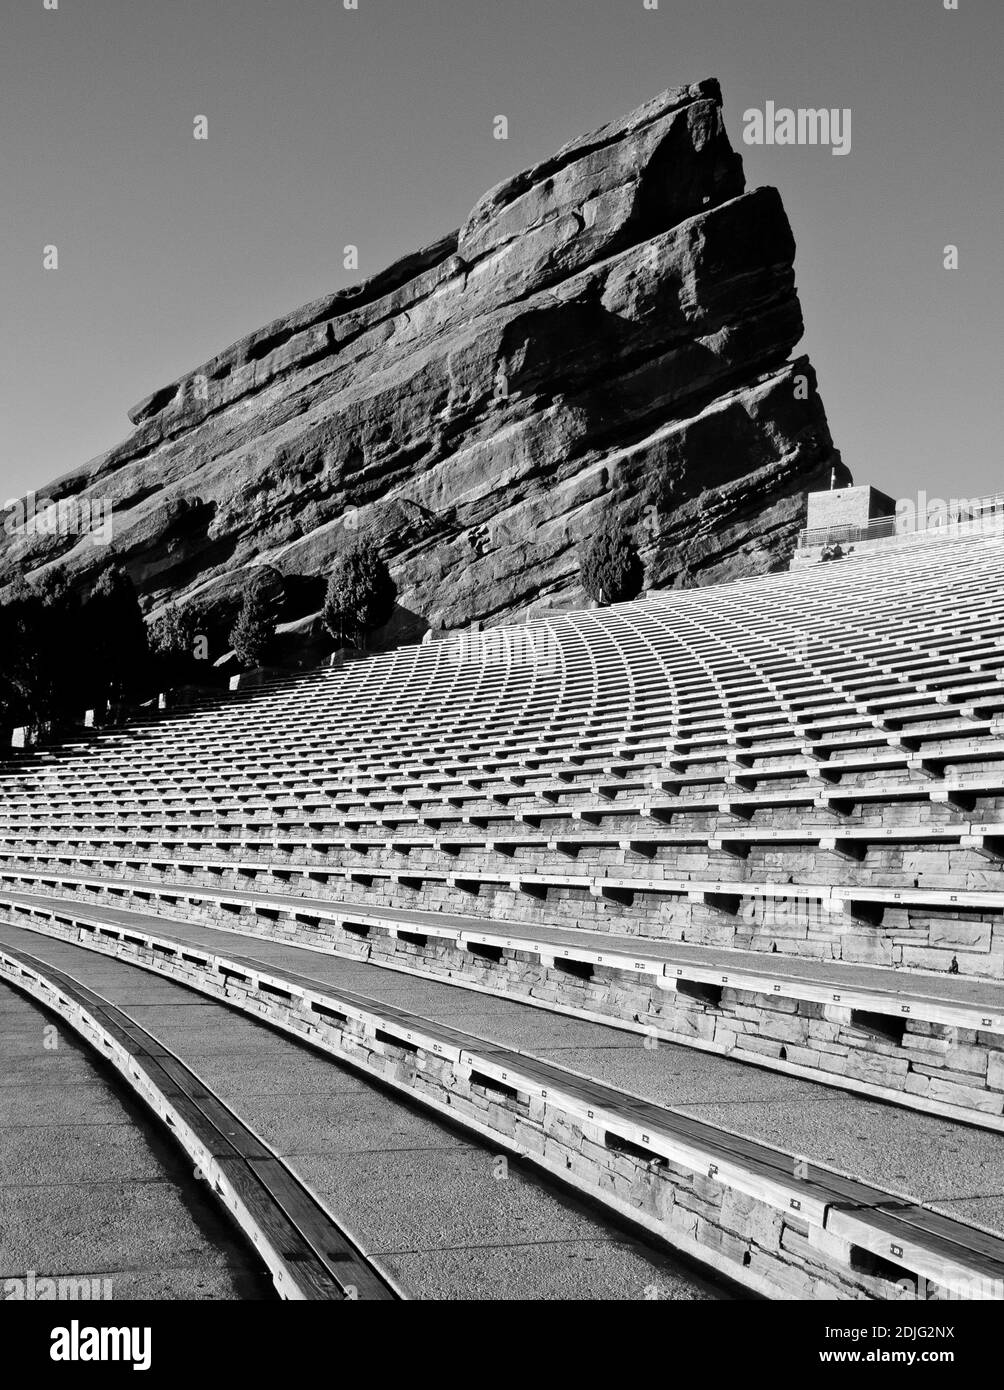 Red Rocks Amphitheater Stock Photo